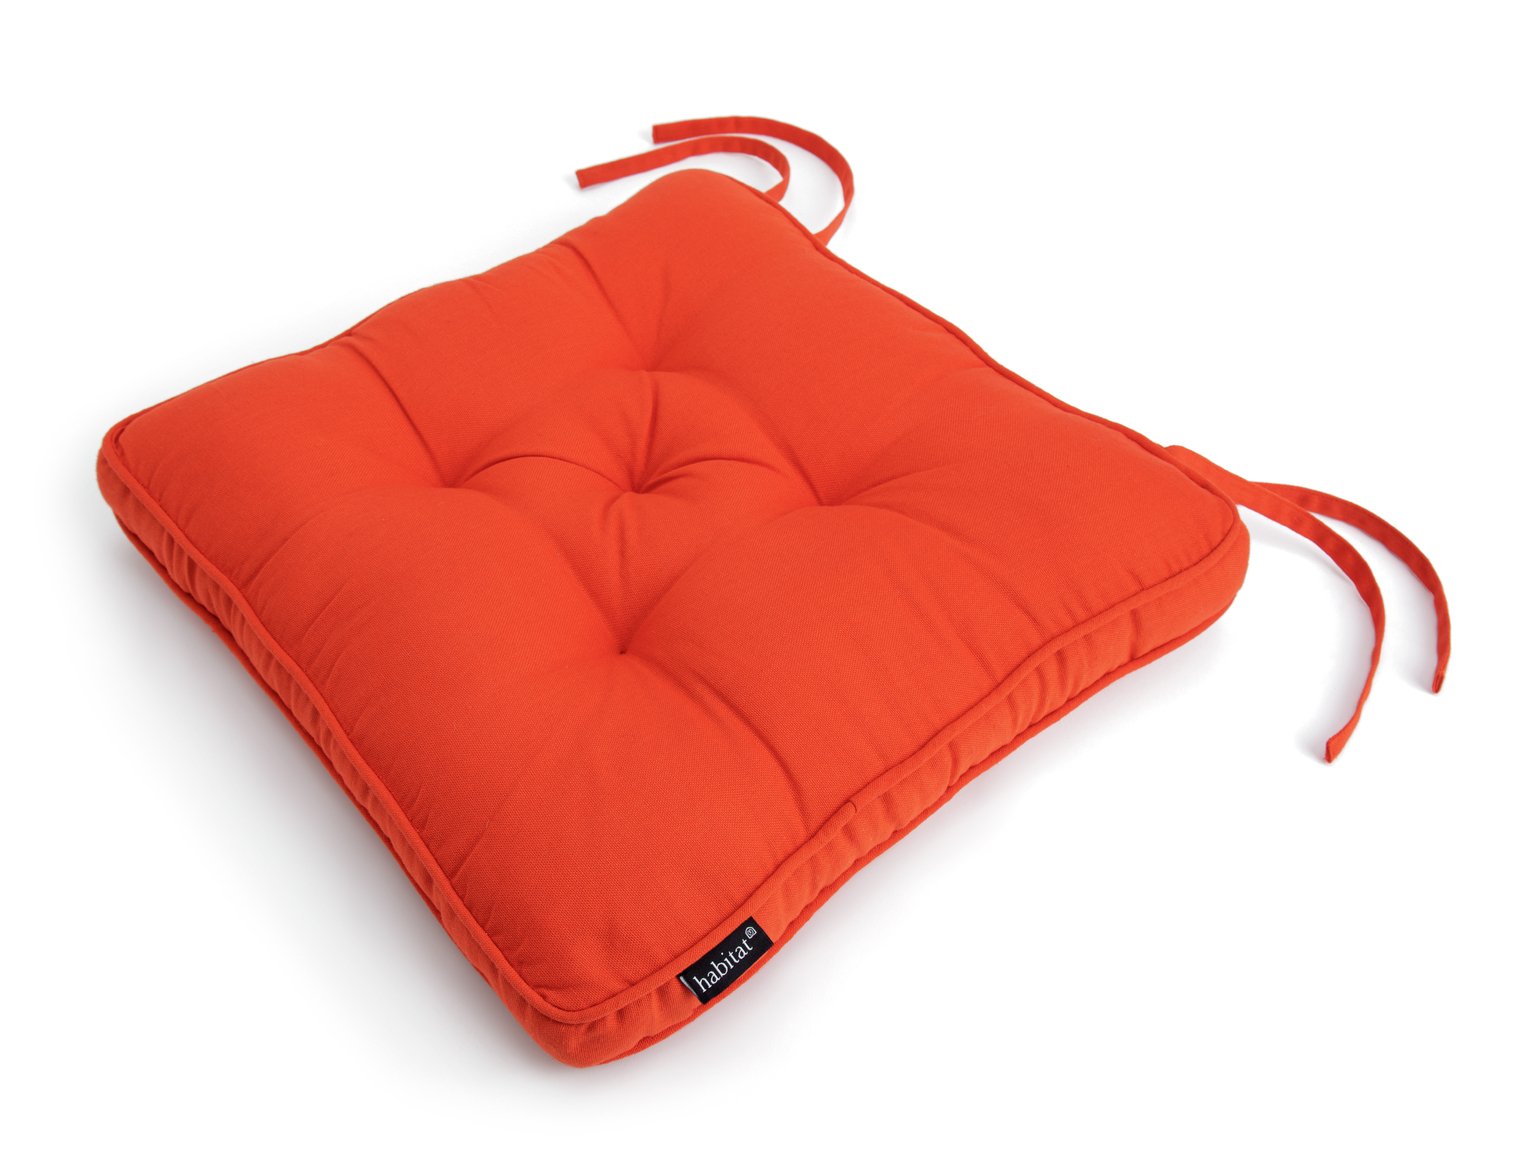 Habitat Festive Pack of 2 Seat Cushion - Red